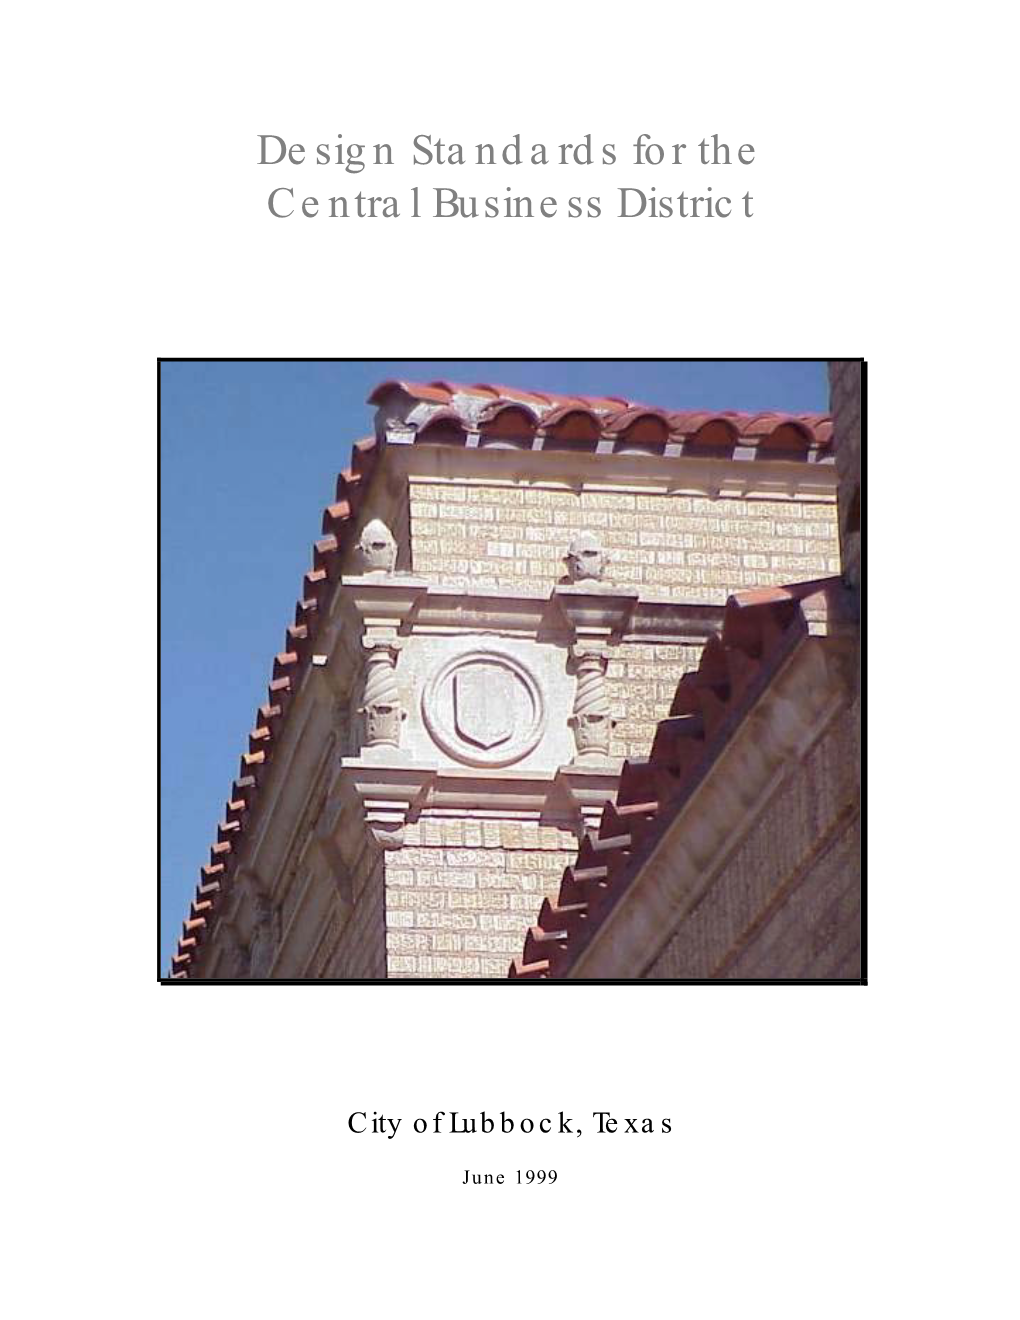 1999 Design Standards for Central Business District